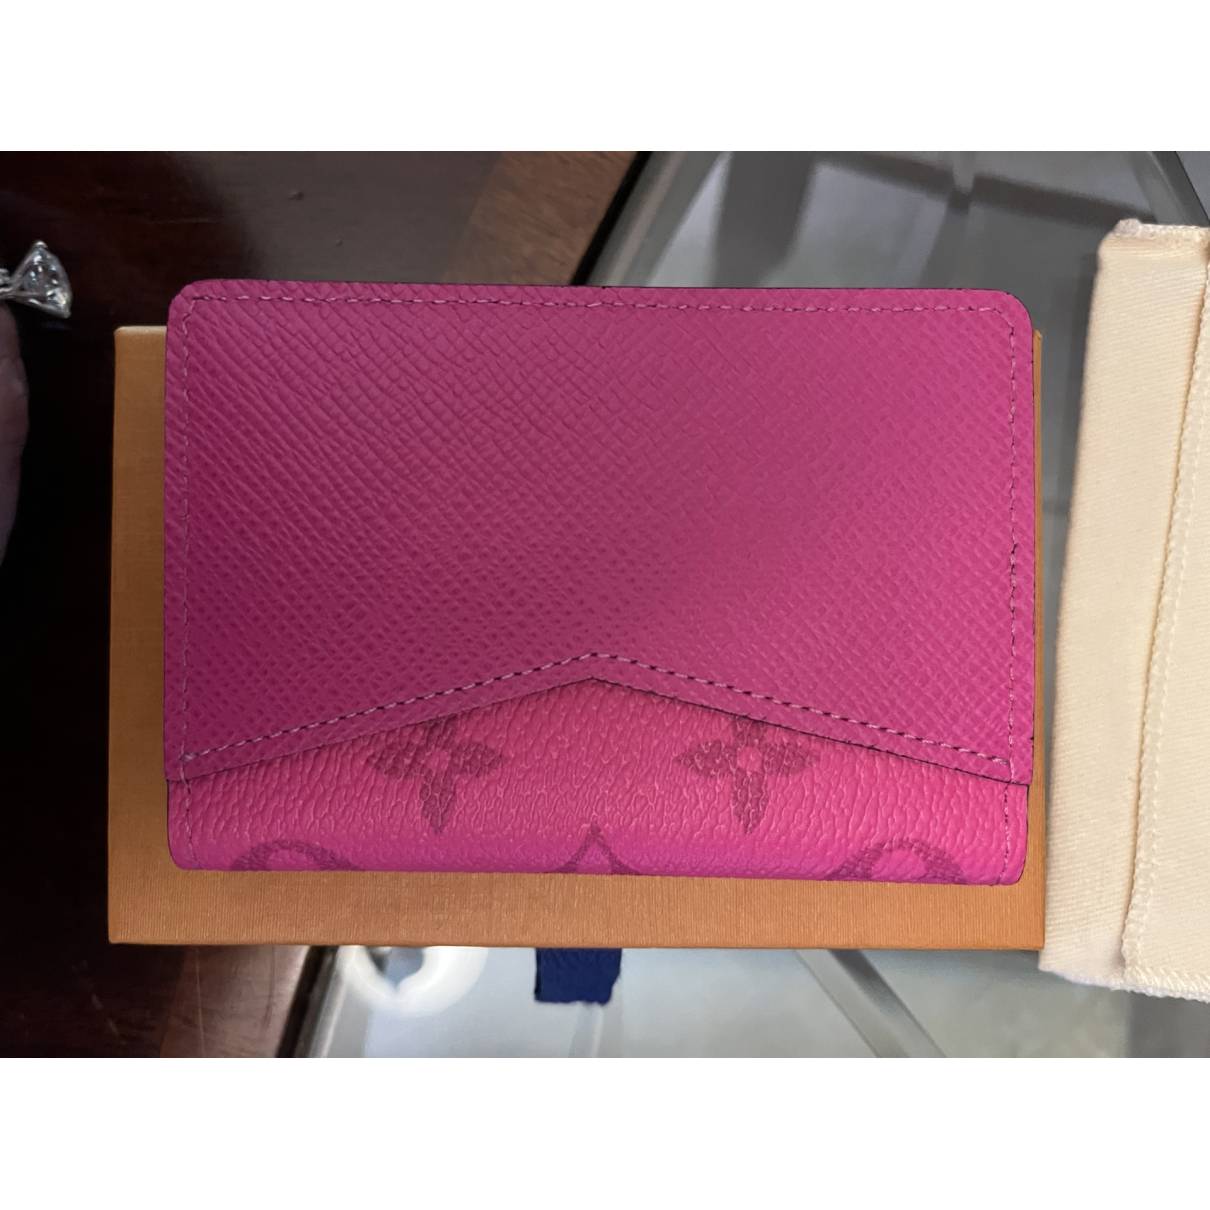 Louis Vuitton, Bags, Louis Vuitton Hot Pink Wallet